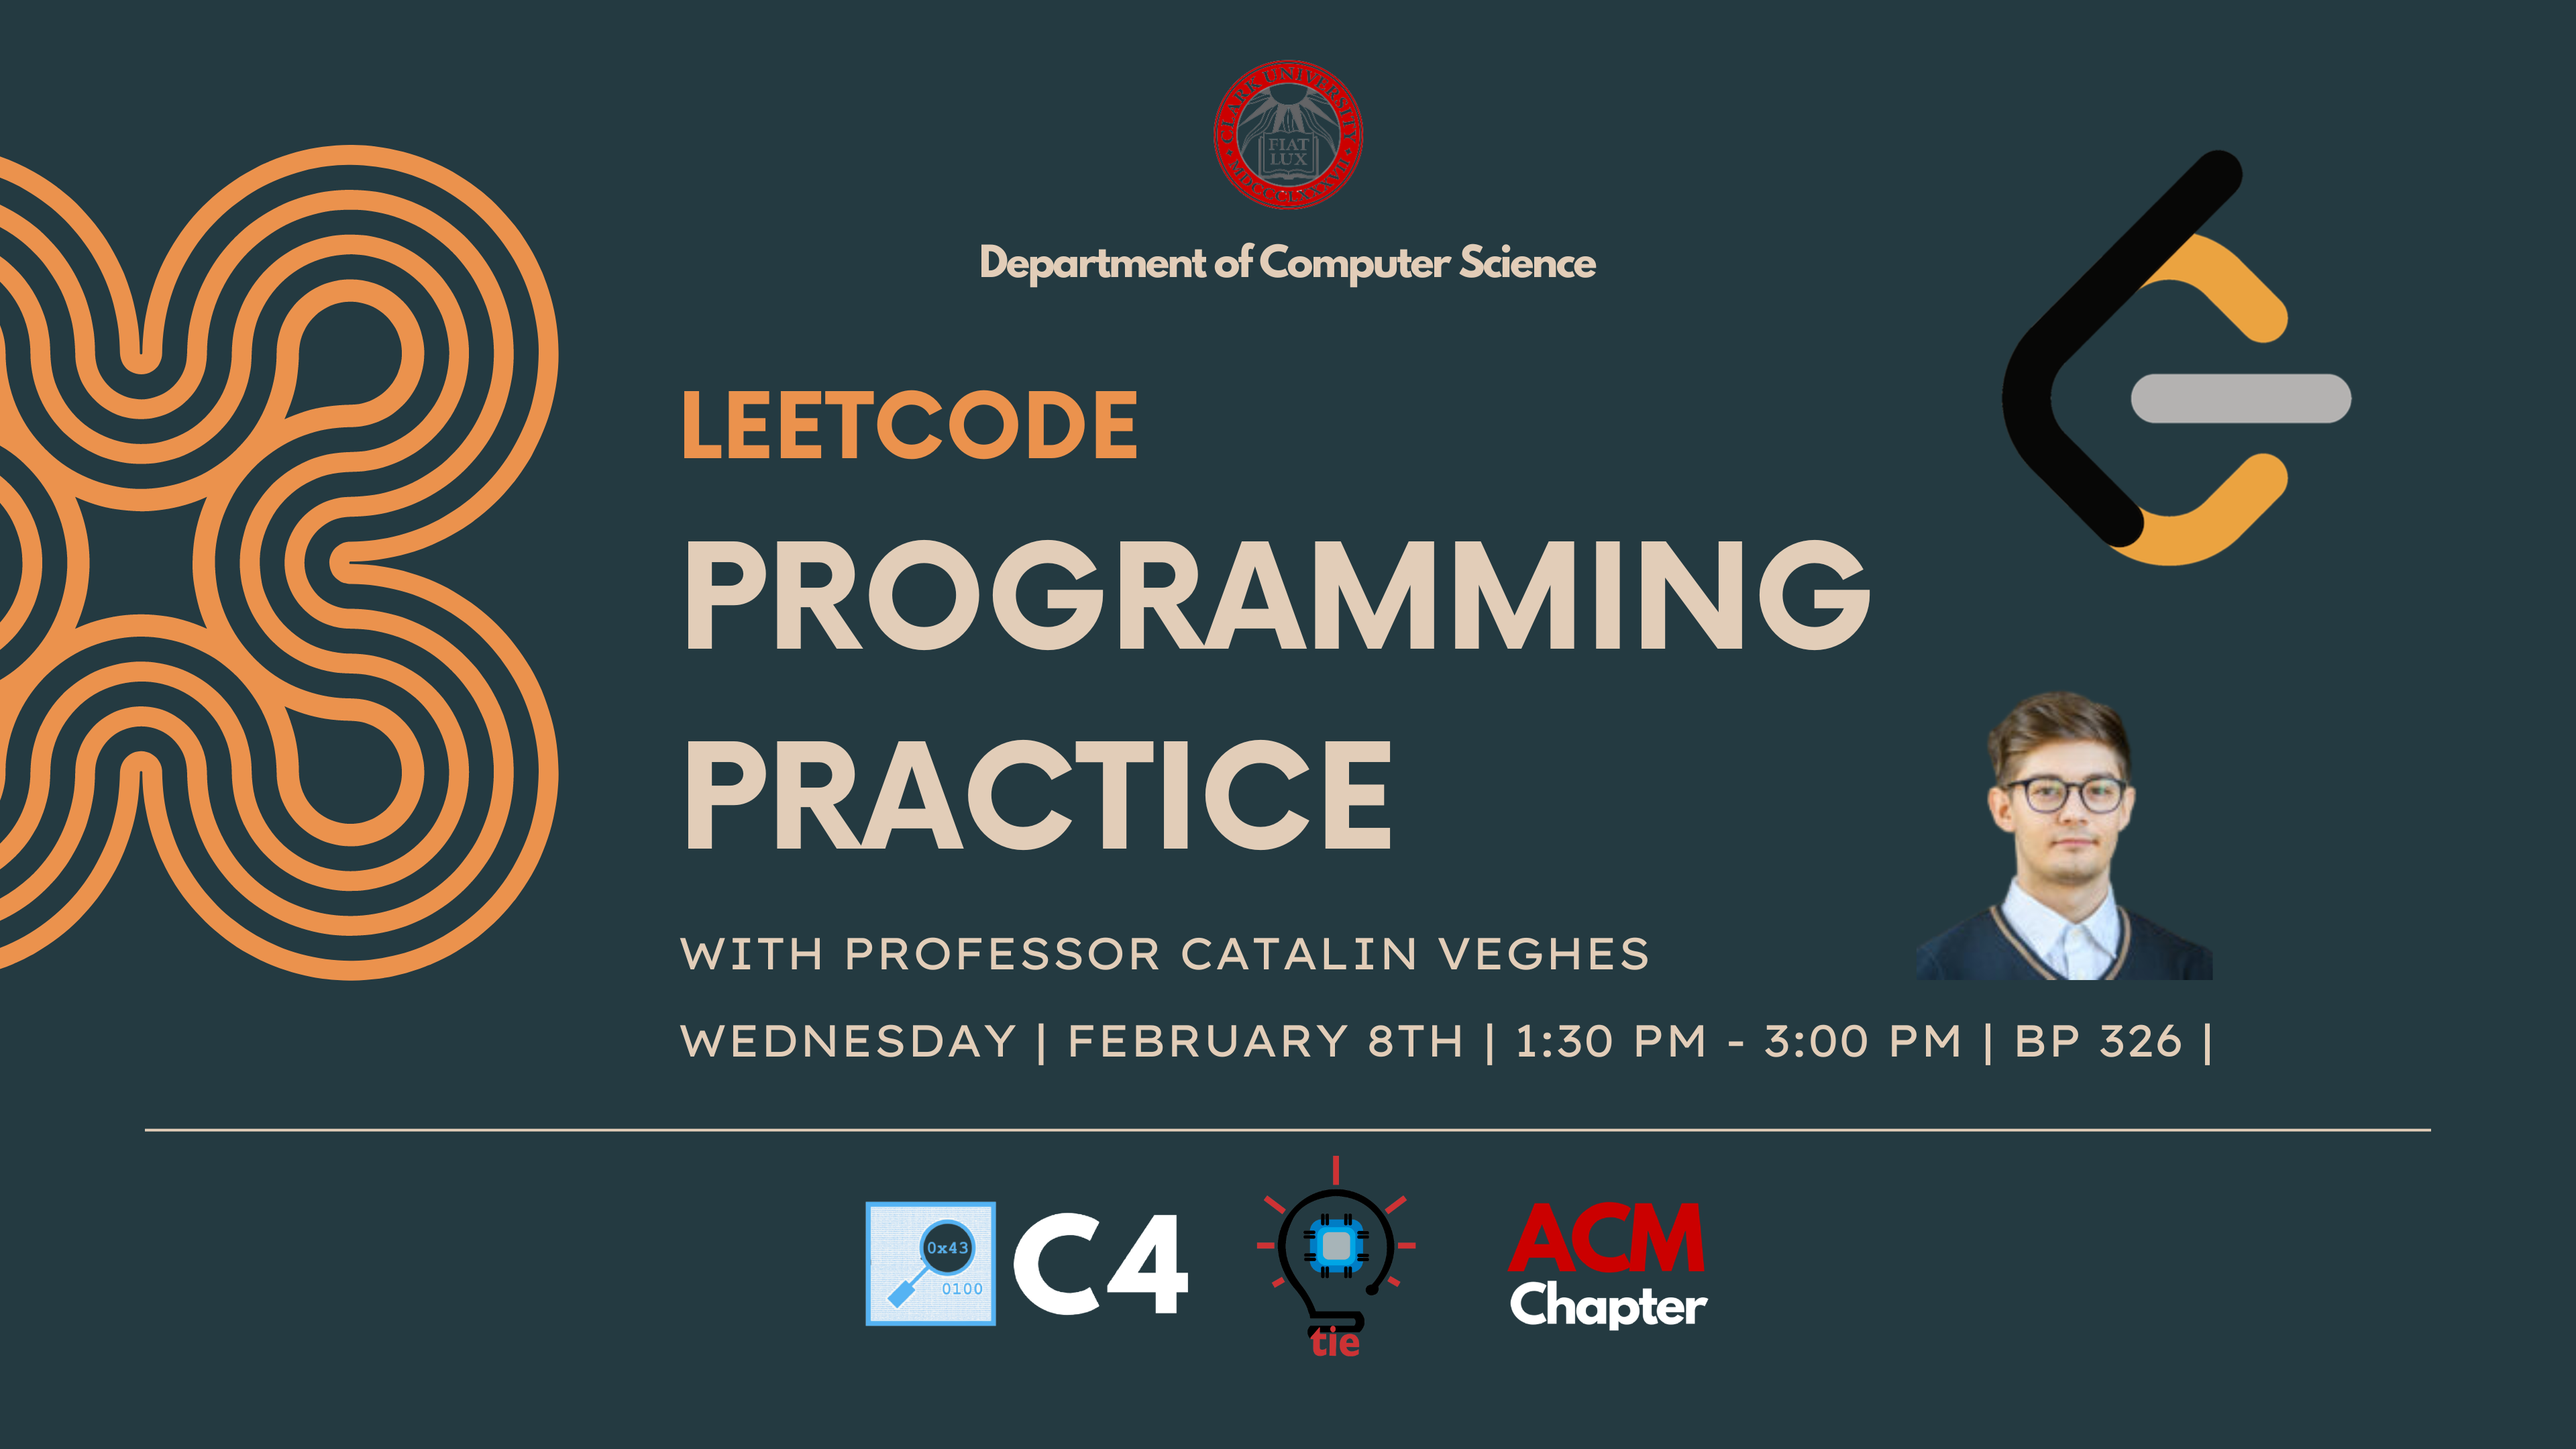 LeetCode Programming Practice Flyer for 02/08 at 1:30 PM in BP 326